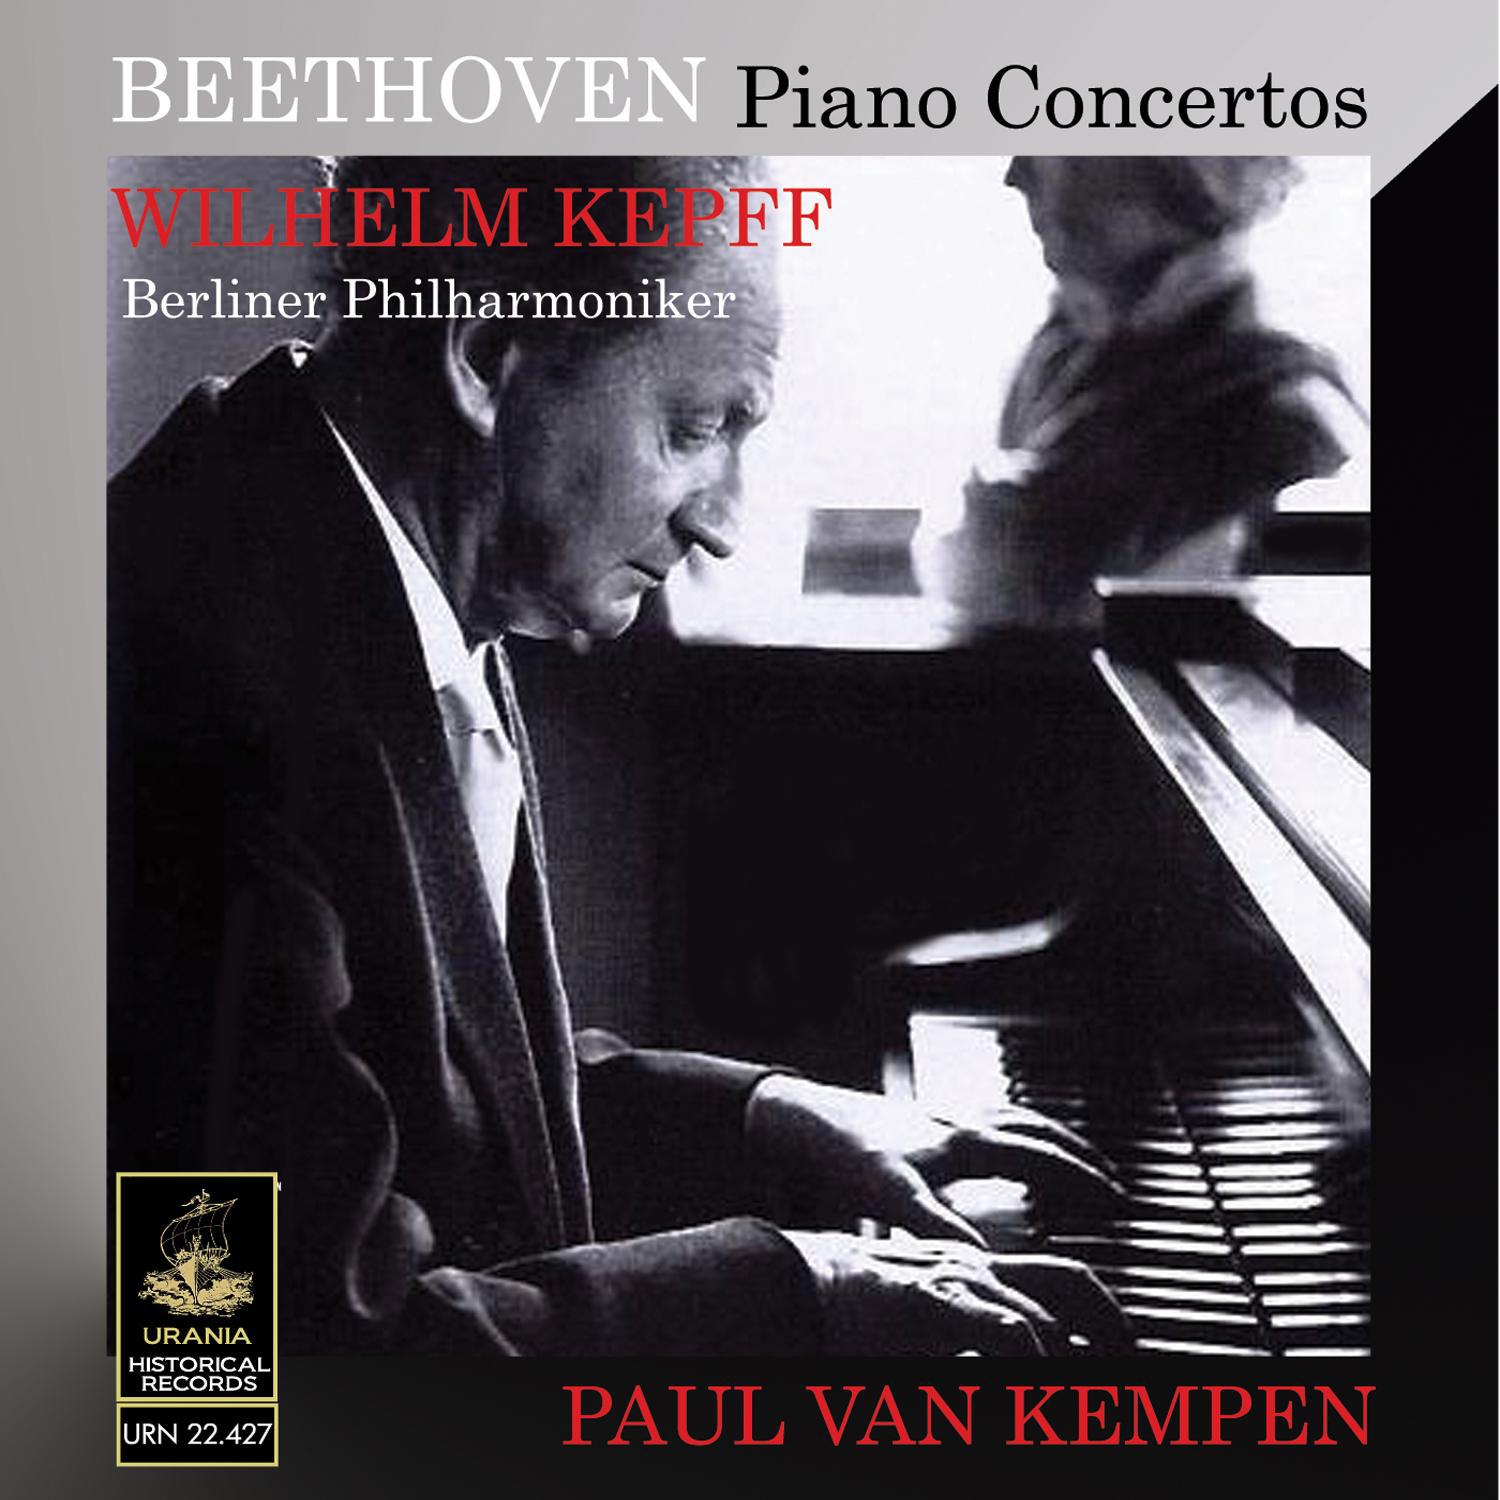 Wilhelm Kempff - Piano Concerto No. 2 in in B-Flat Major, Op. 19: I. Allegro con brio